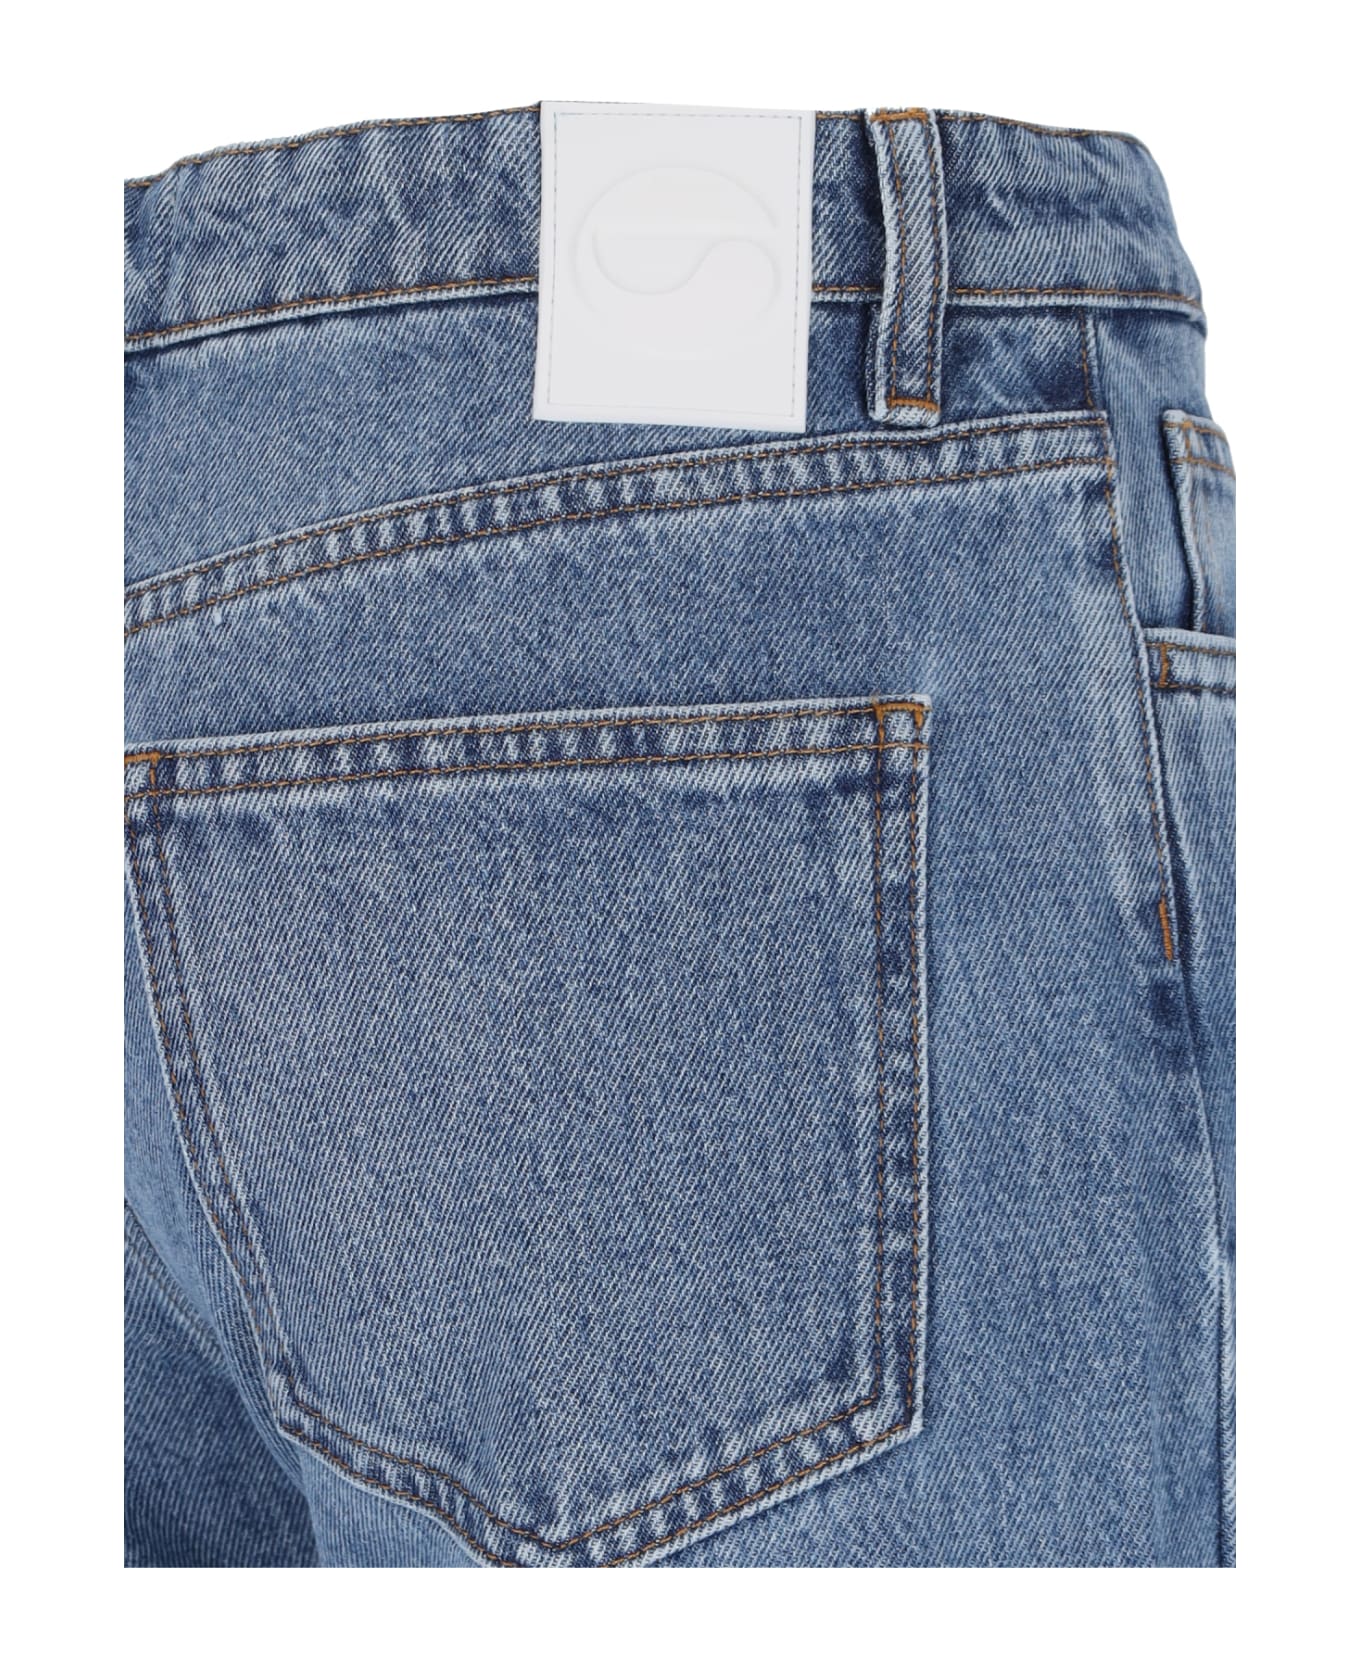 Coperni 'open Knee' Jeans - WASHED BLUE デニム